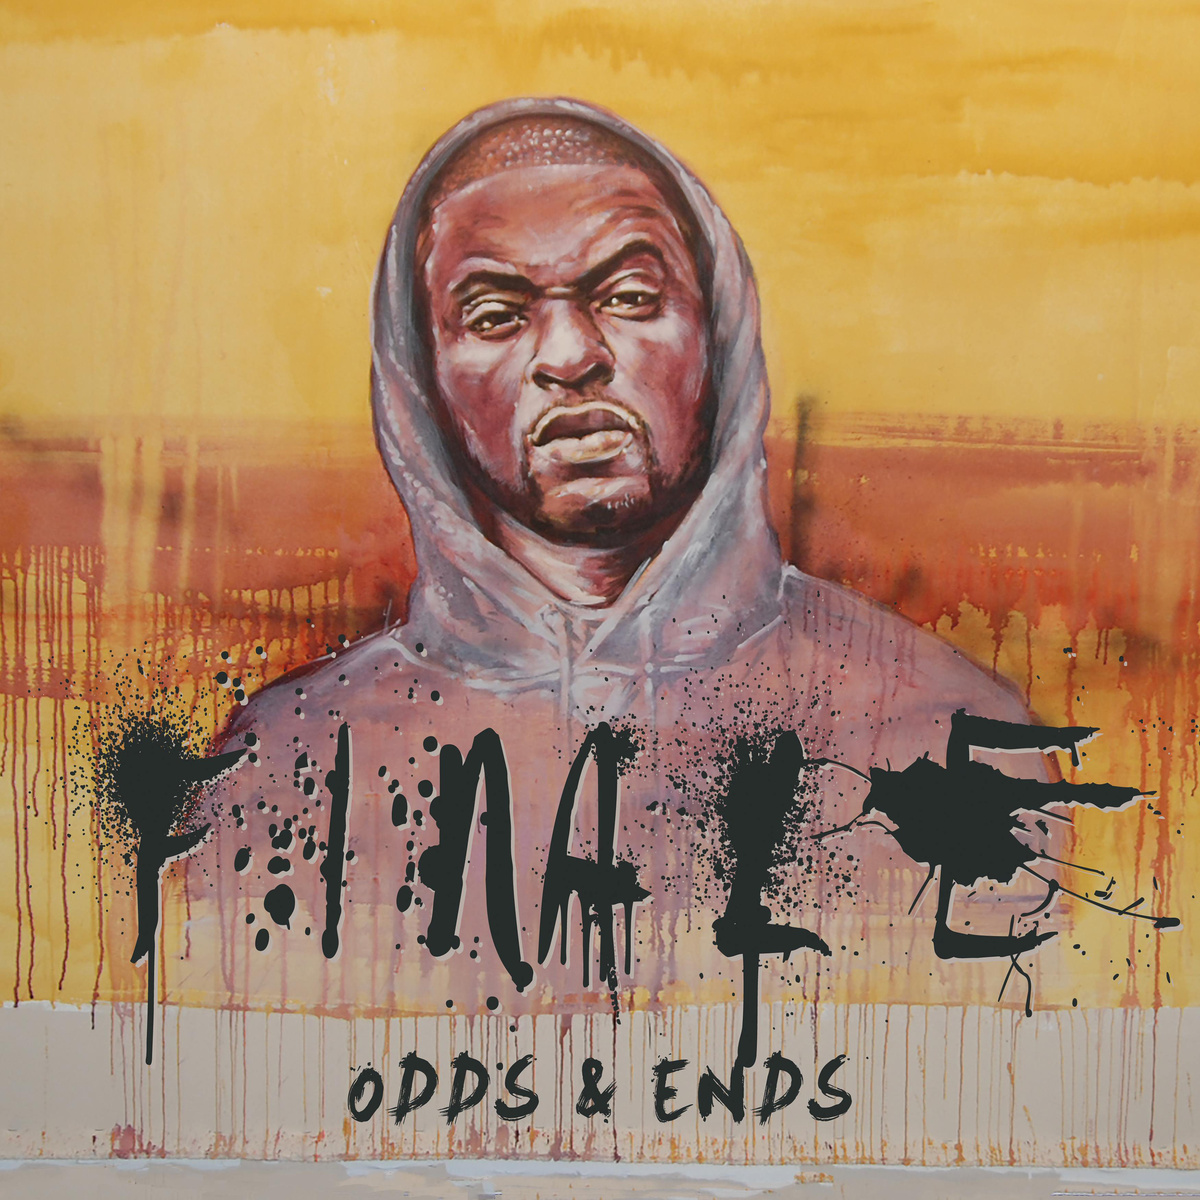 Finale - "Odds & Ends" (Release)